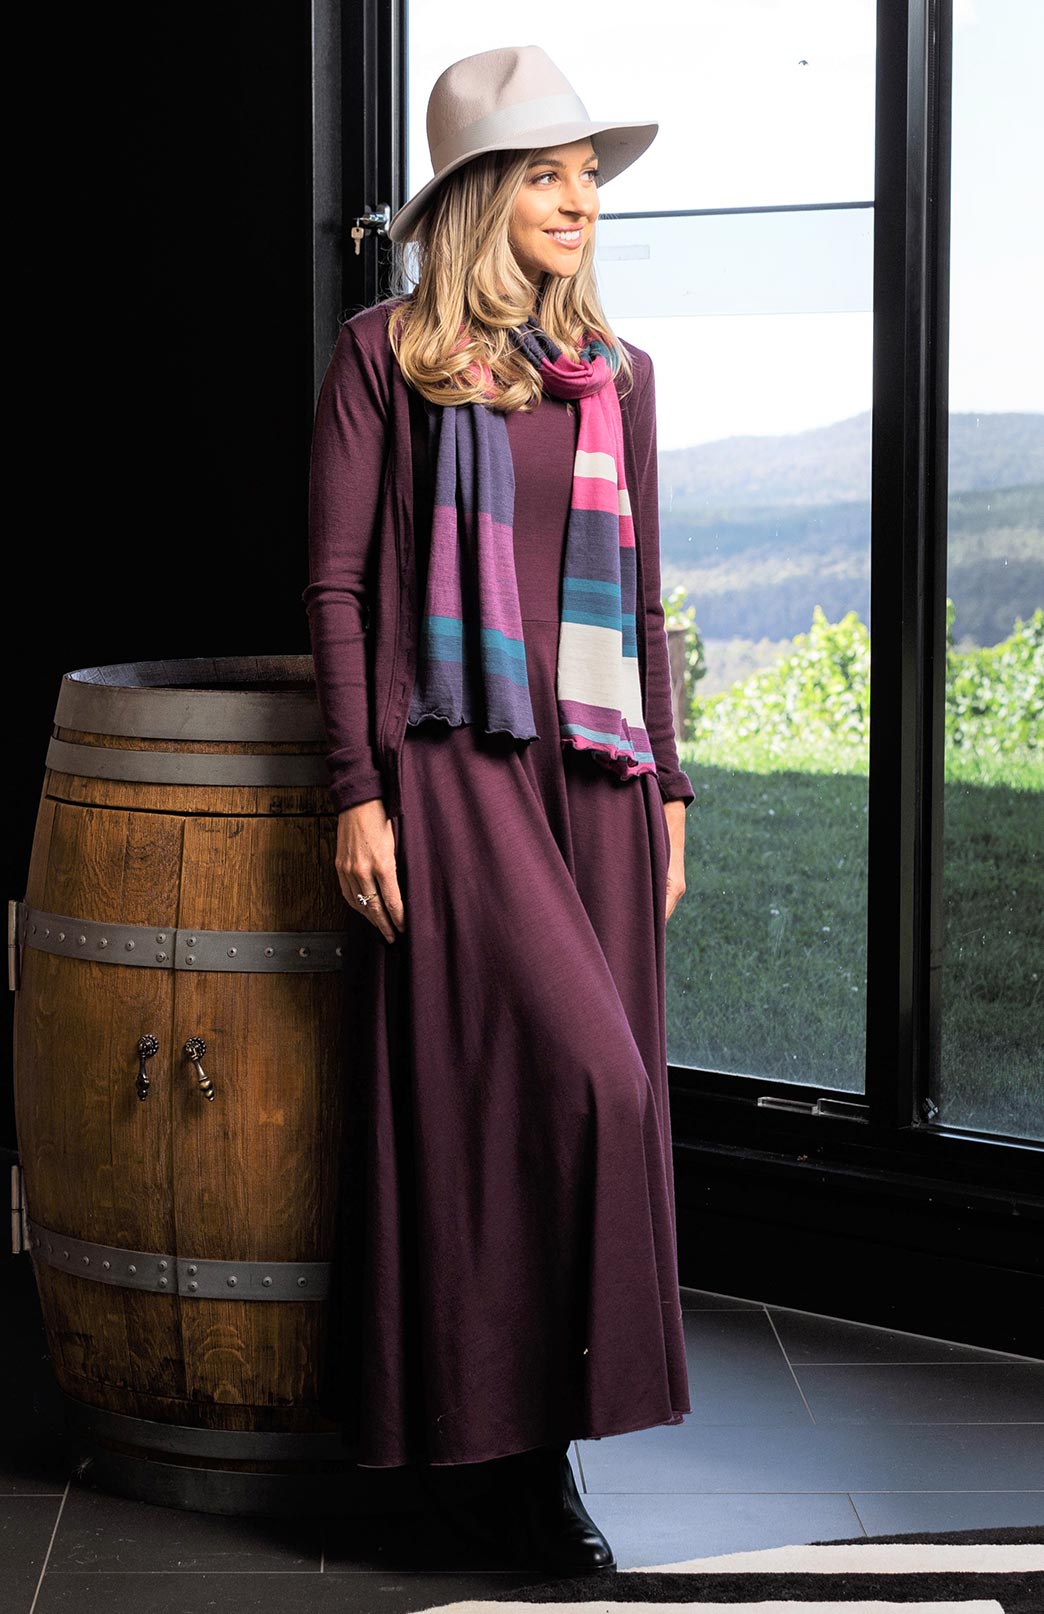 Flo Dress | Women's Purple Sleeveless Merino Wool Dress with High